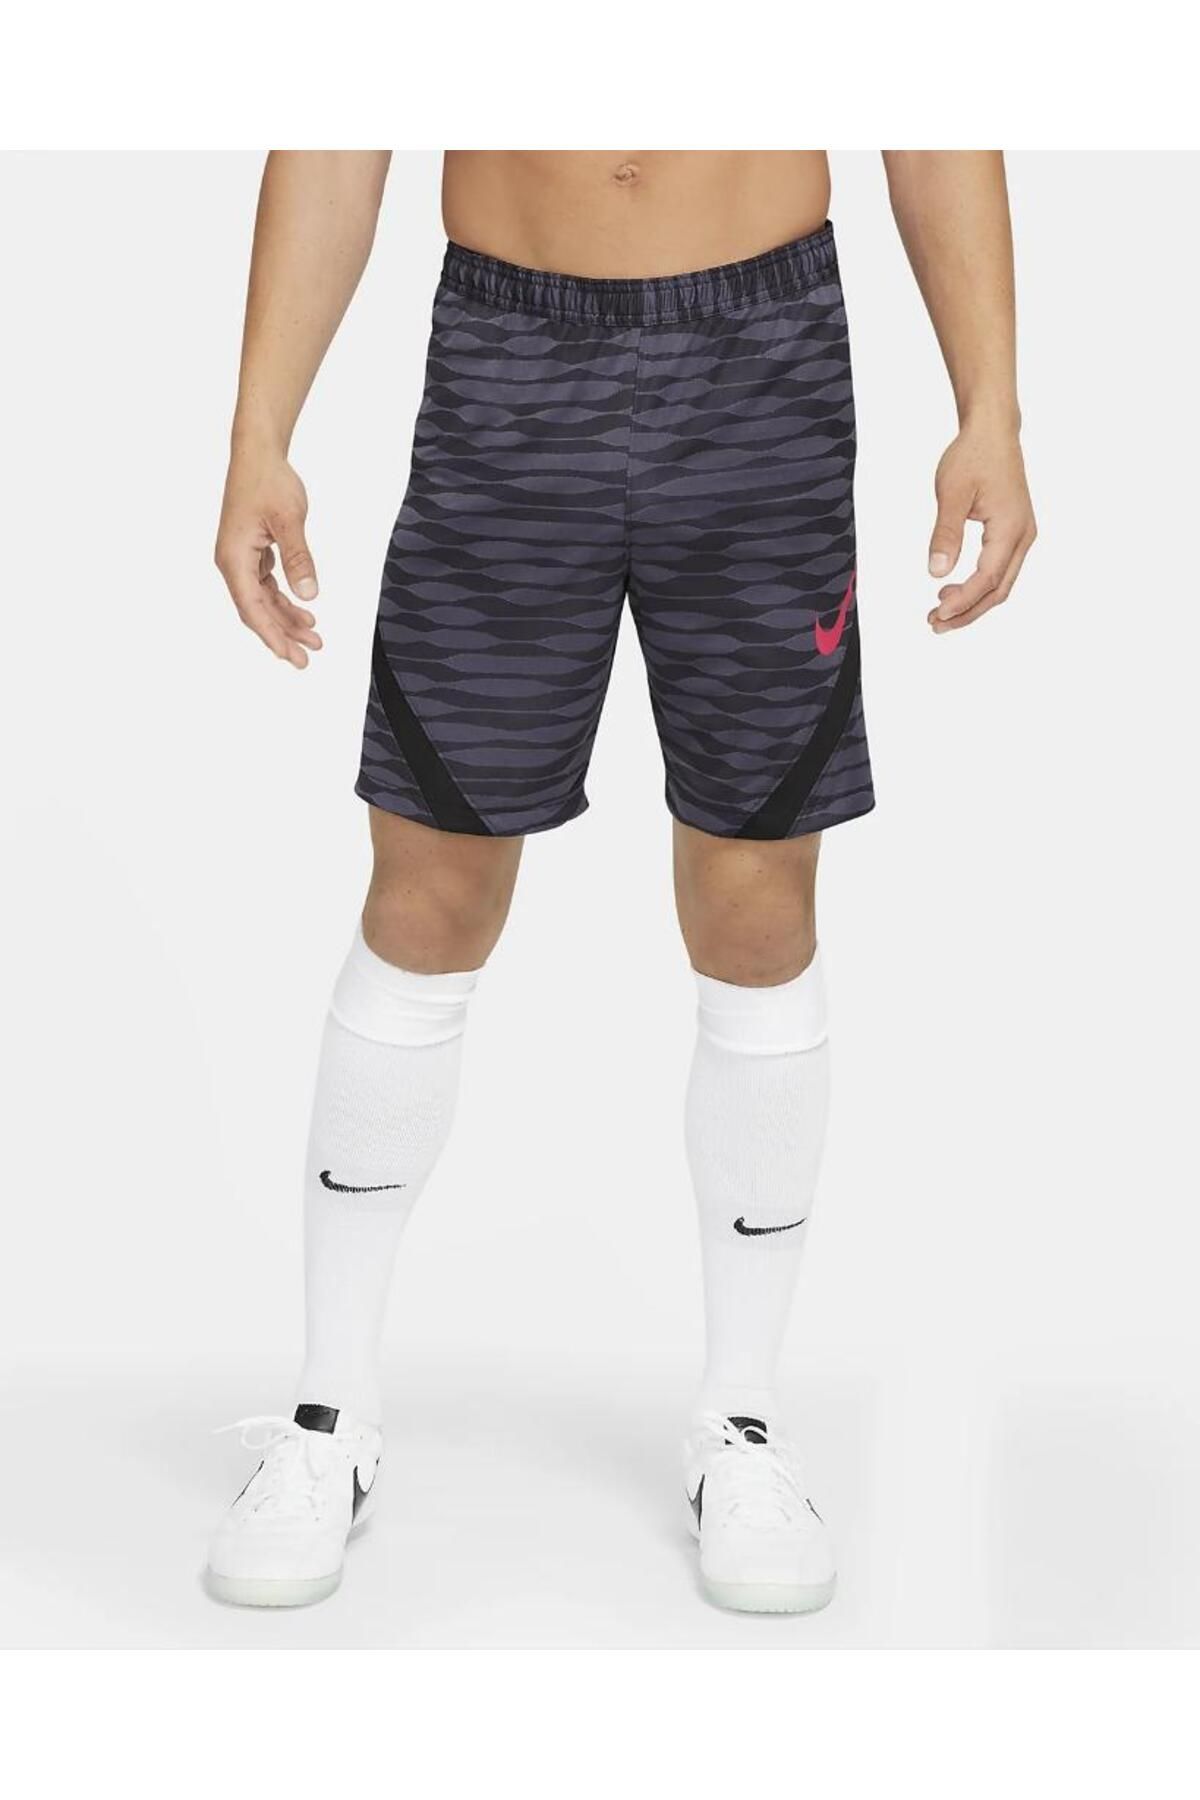 Nike Dri-Fit Strike 21 Mens Large Sport Football Shorts